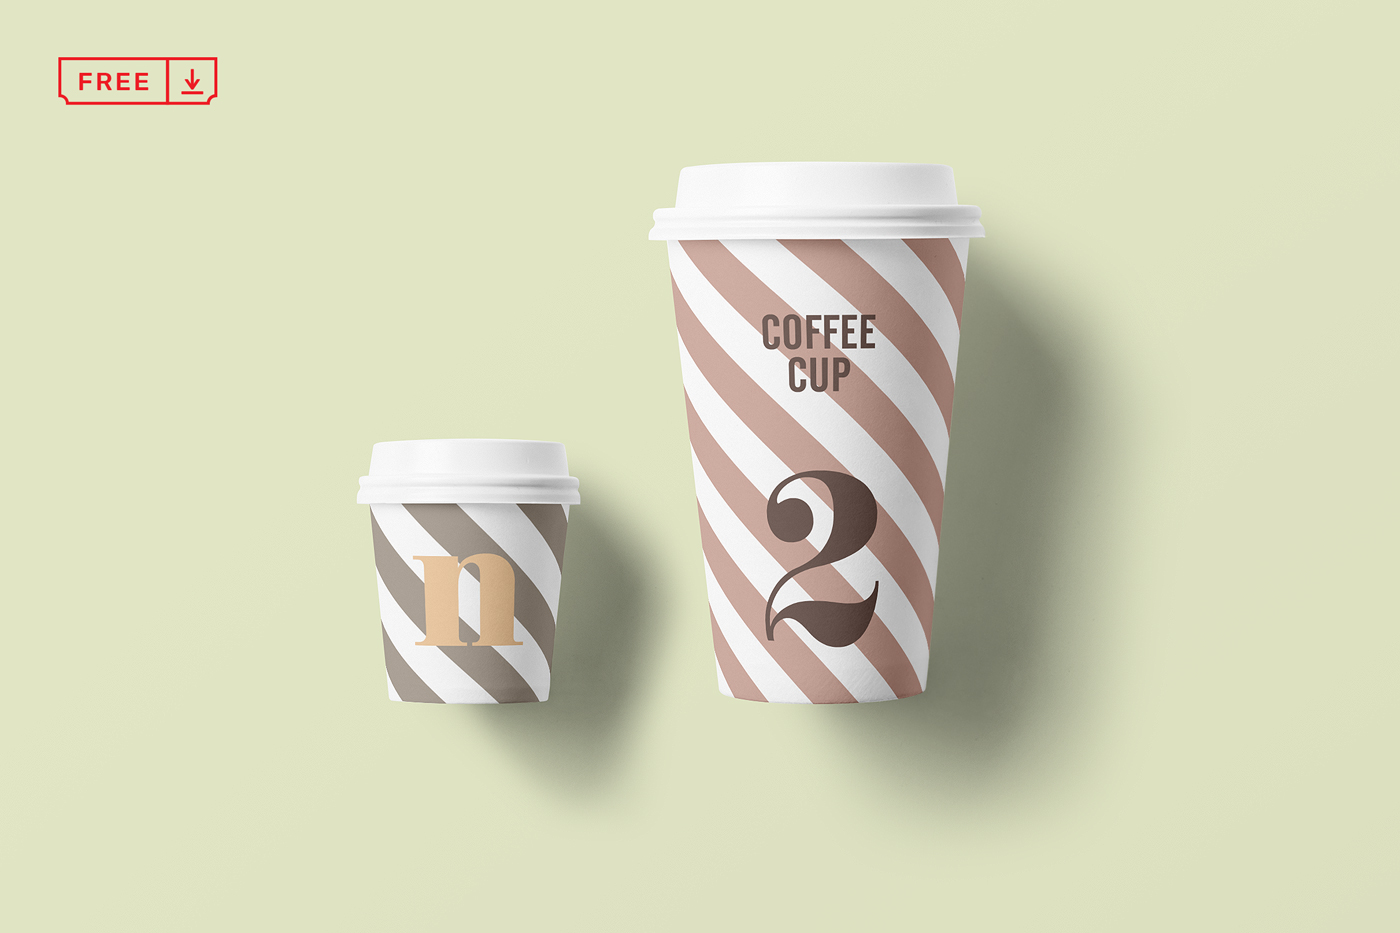 Free small and big coffee cups mockup